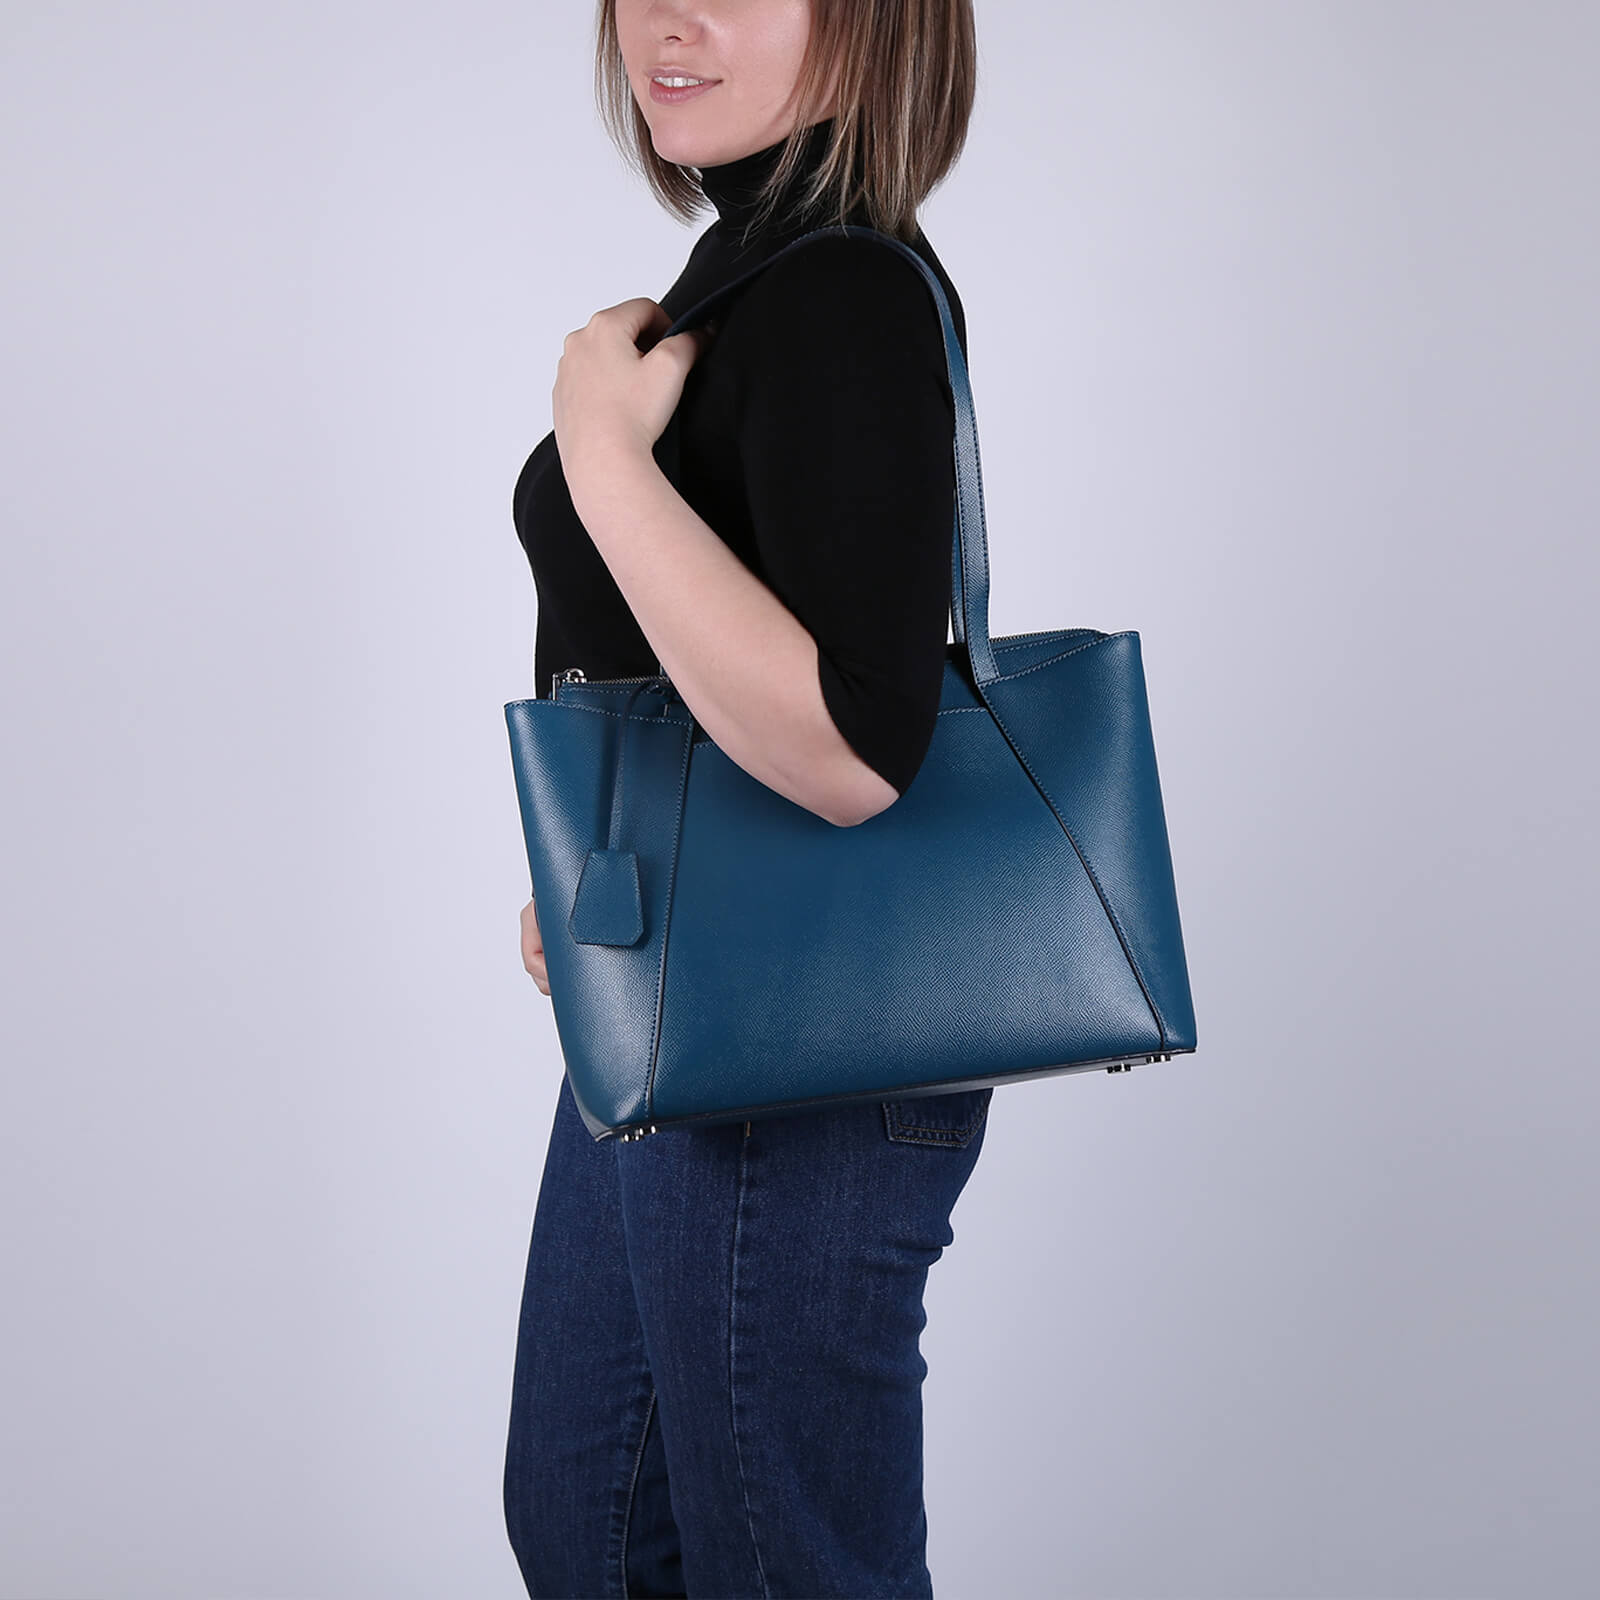 Michael Kors Maddie Medium Crossgrain Leather Tote Bag